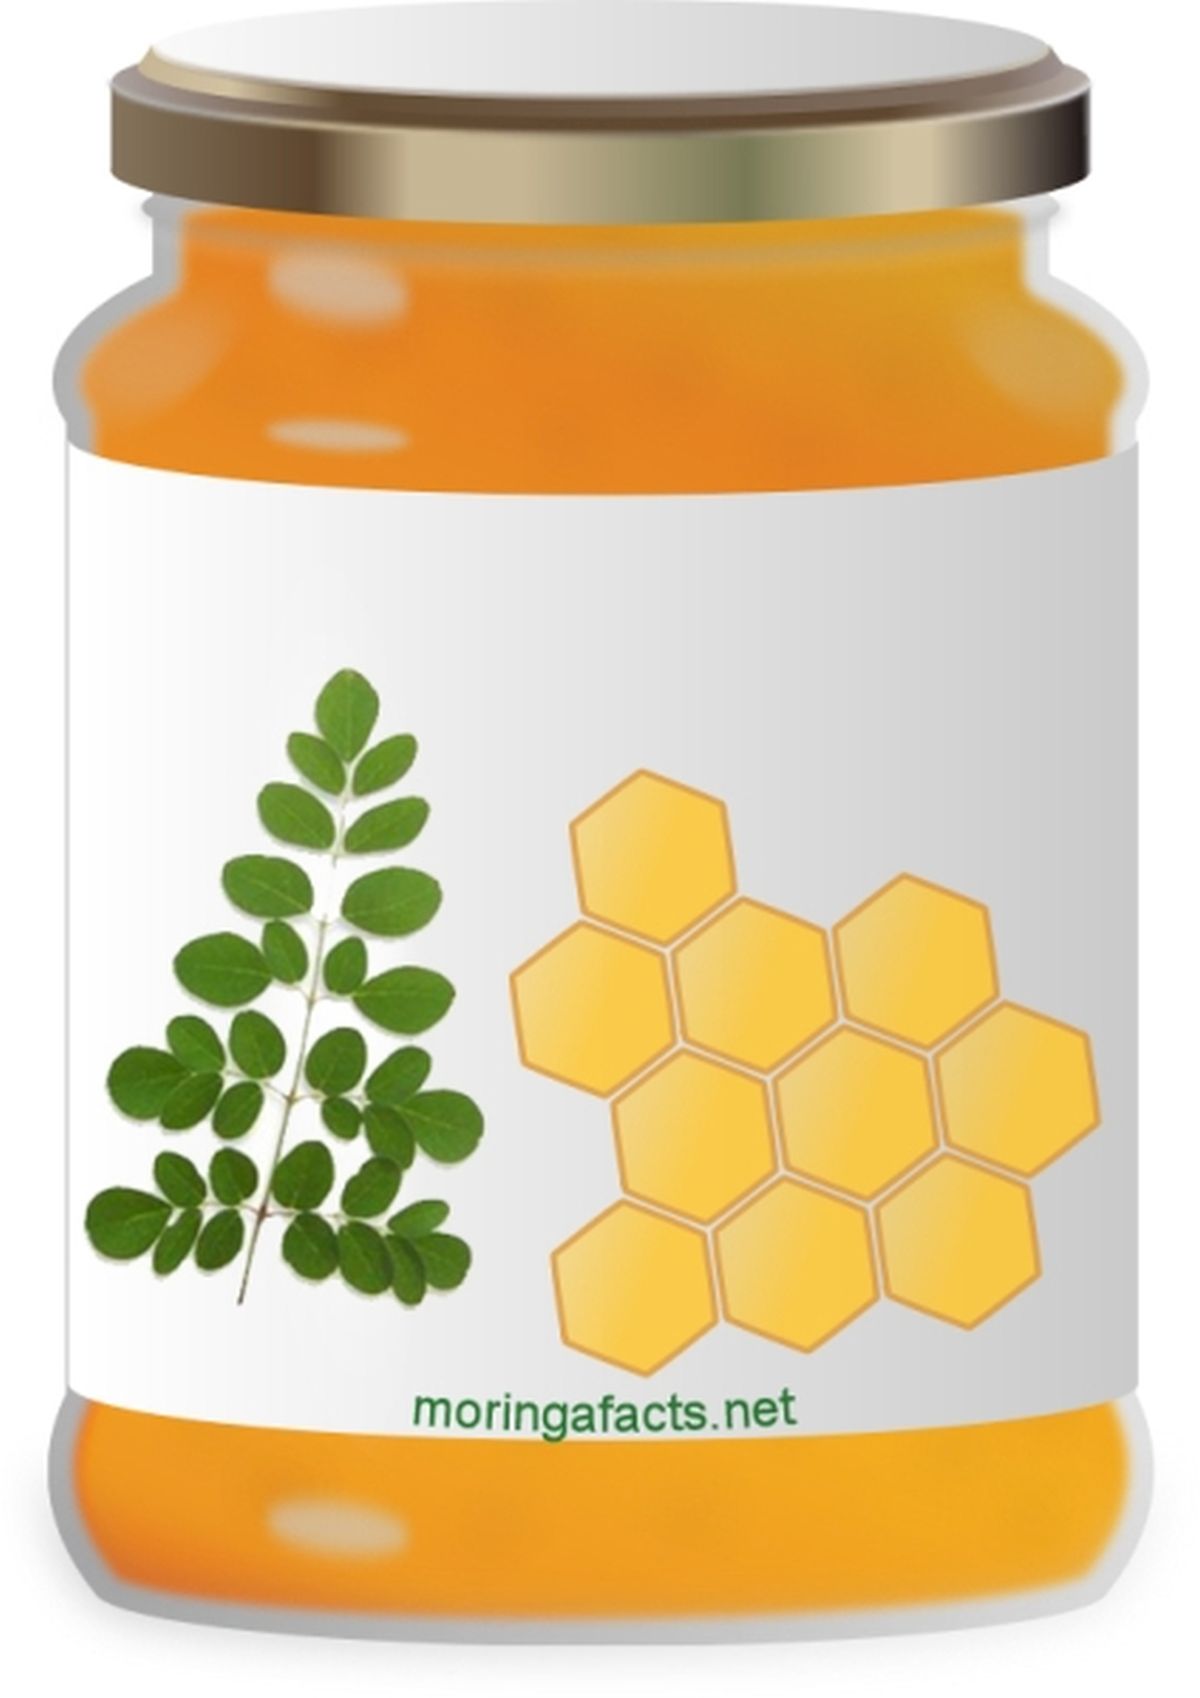 moringa-honey-jar